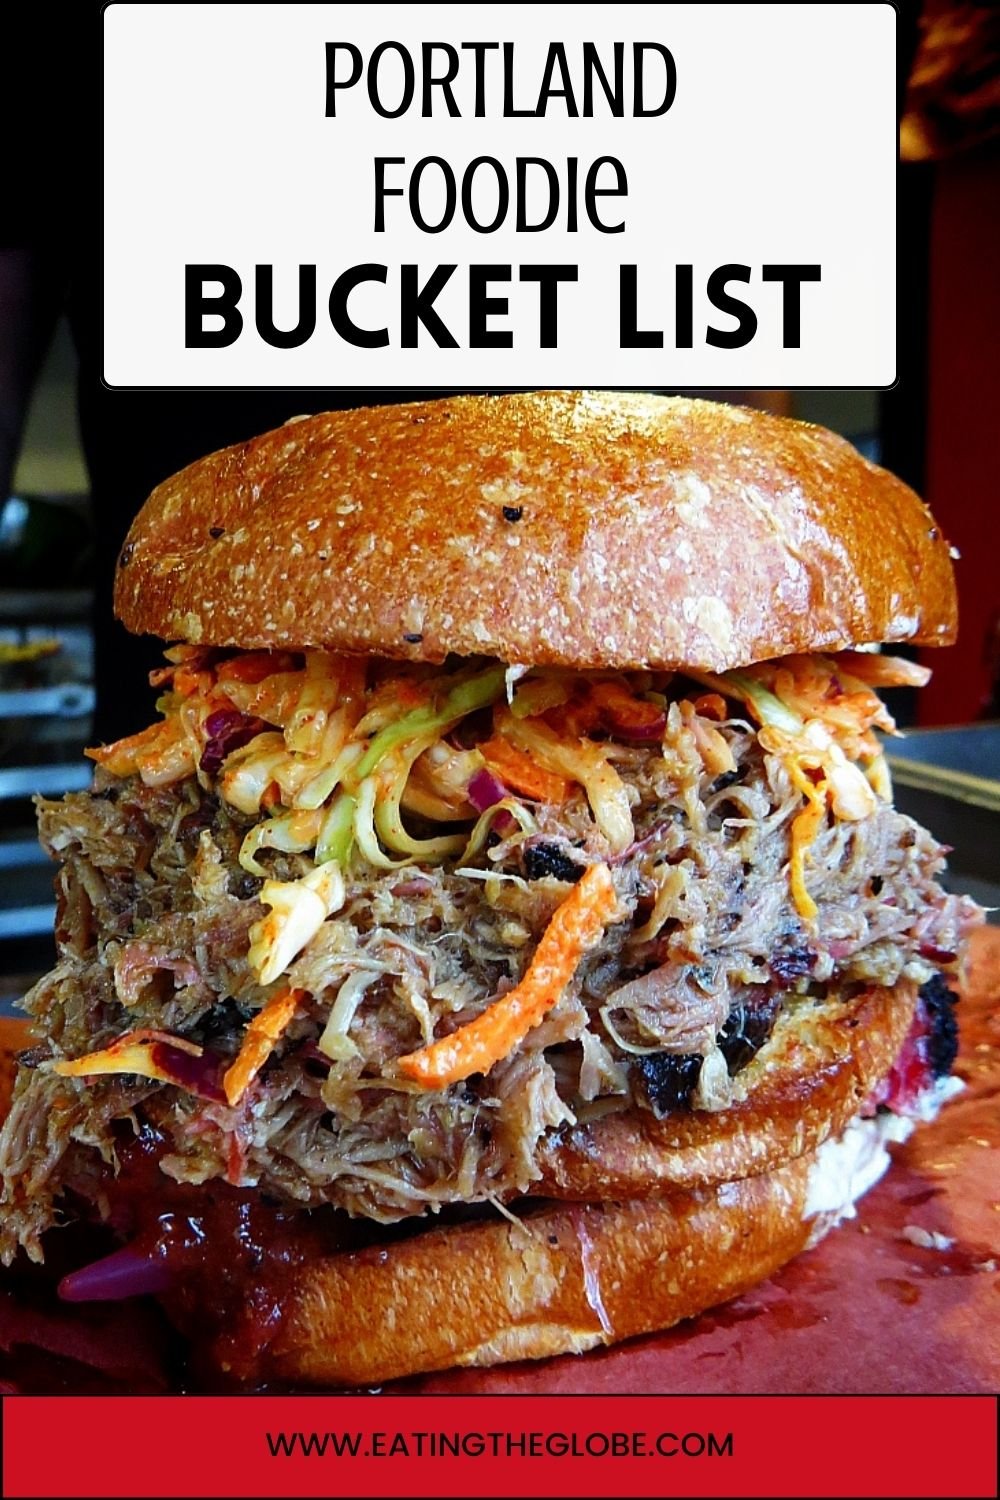 The Portland Foodie Bucket List